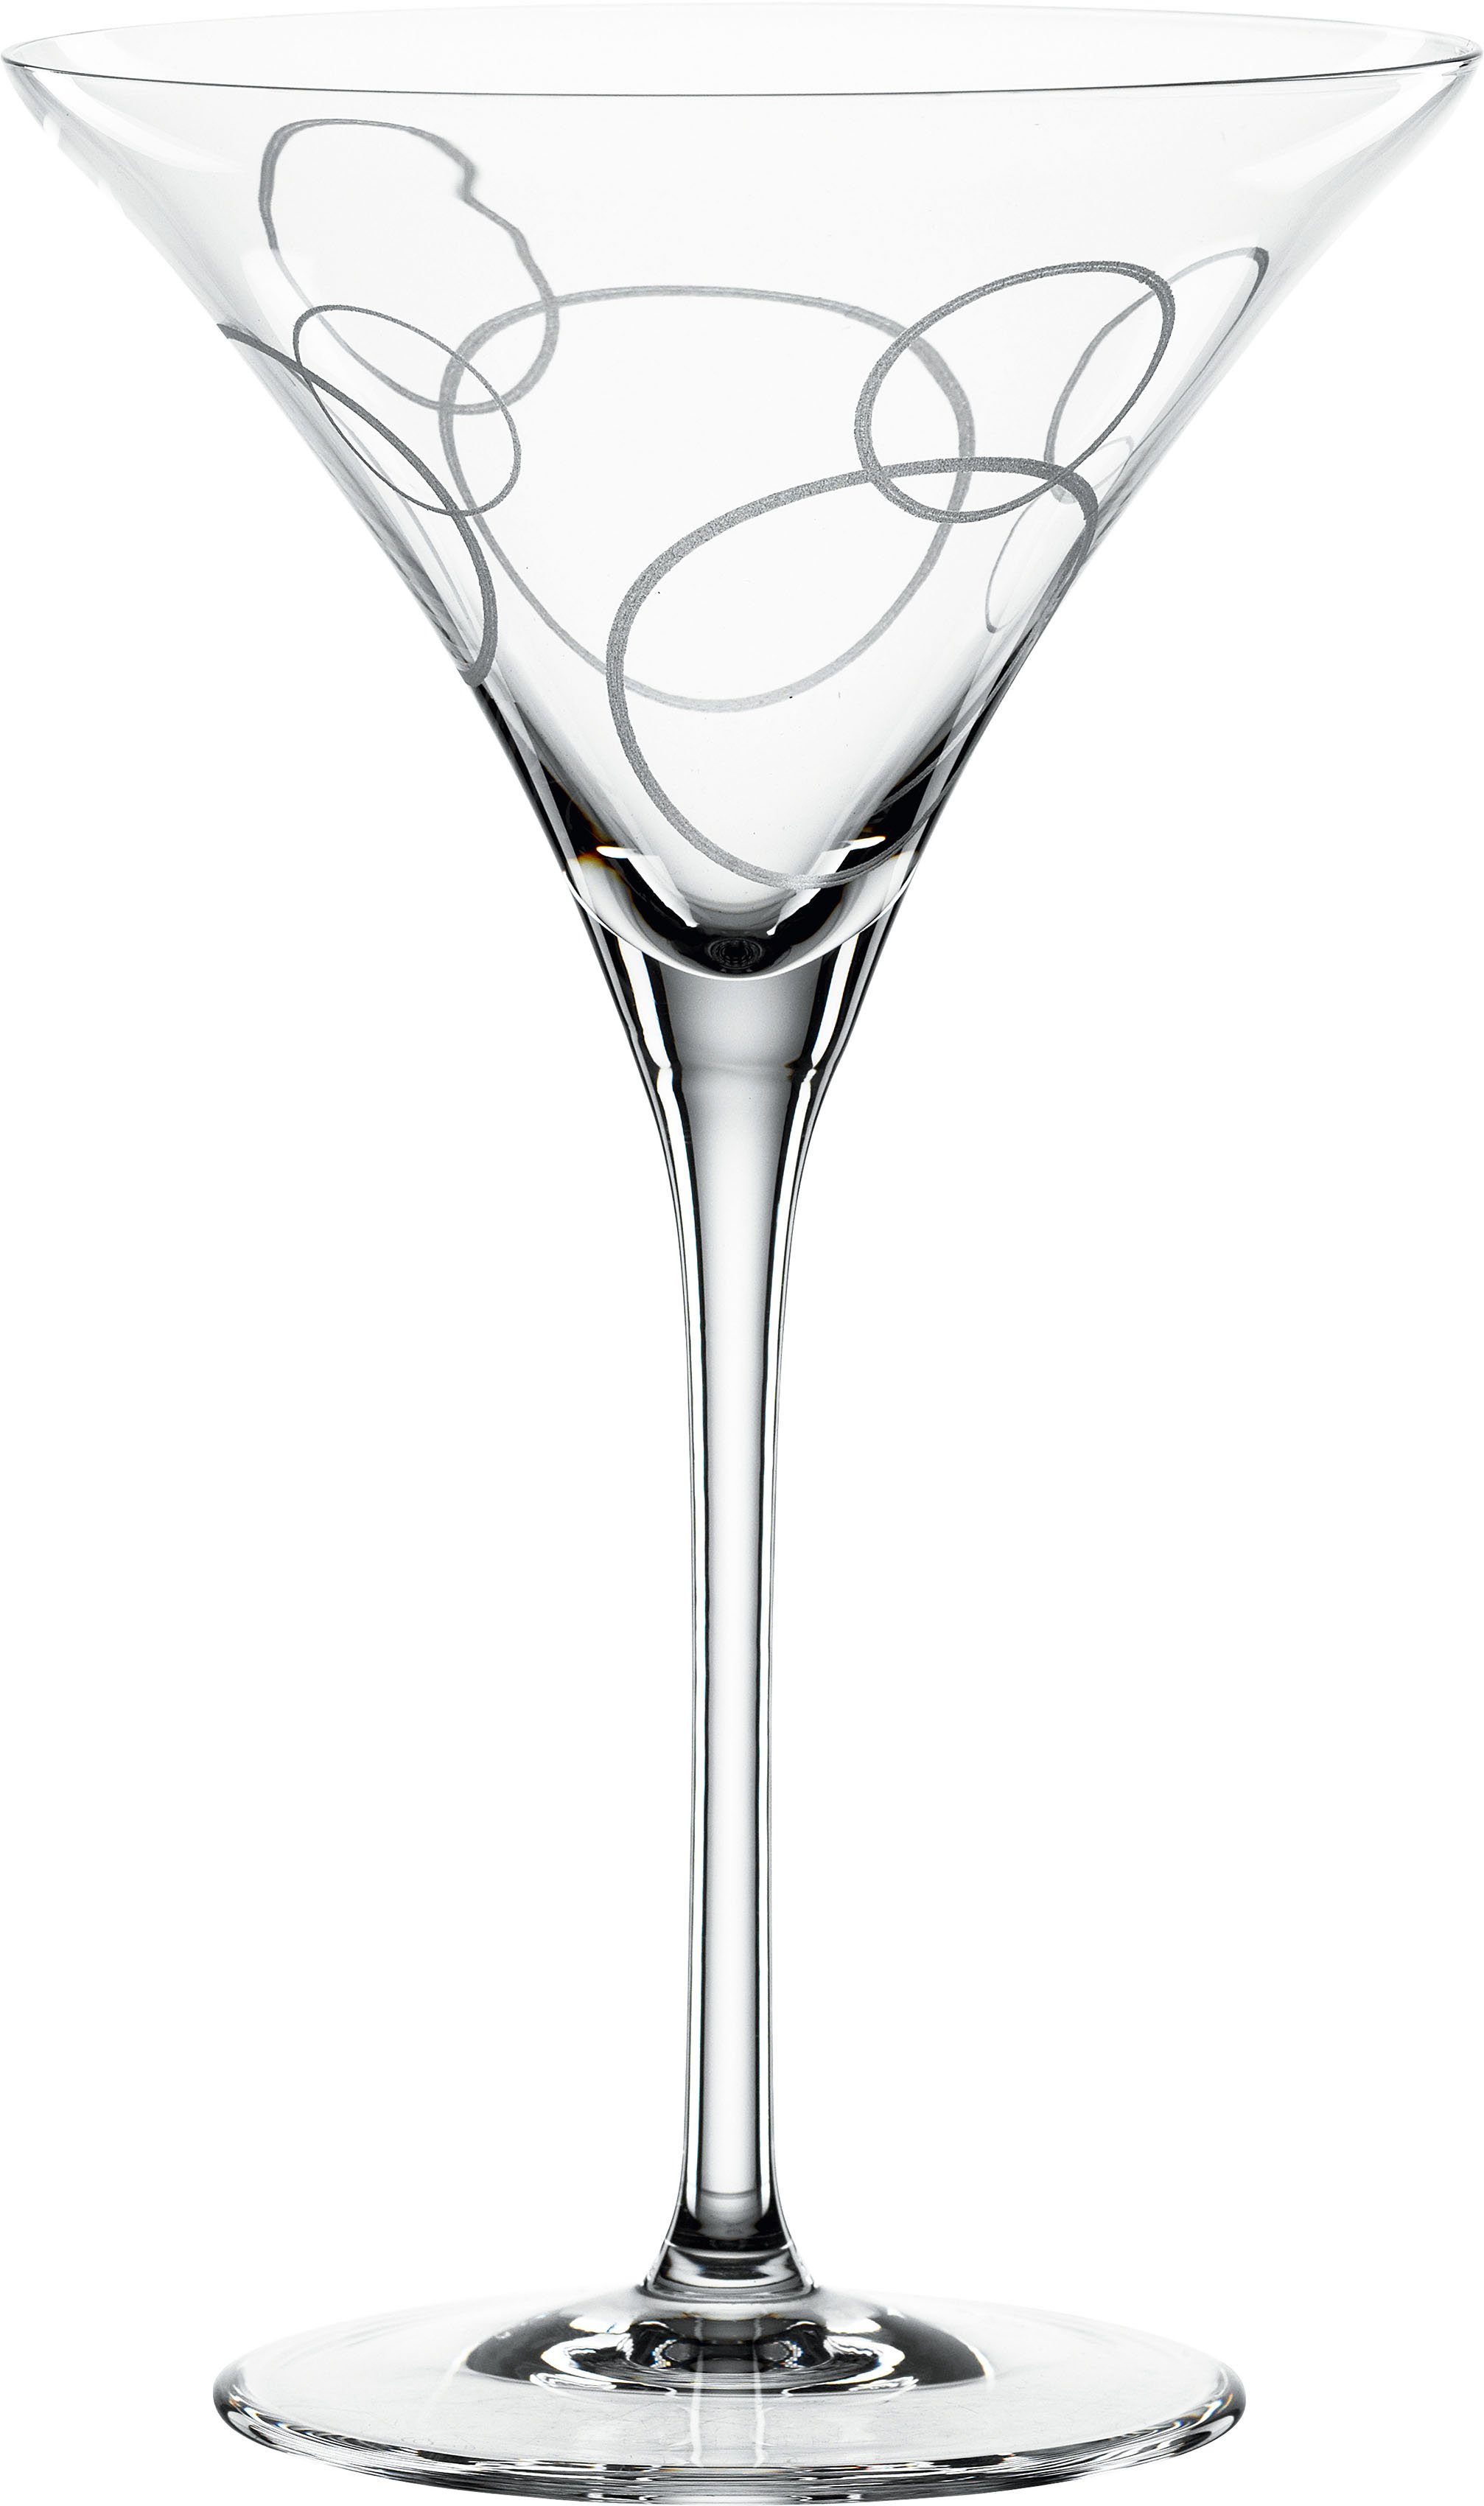 SPIEGELAU Cocktailglas Circles, Kristallglas, 2-teilig, 220 ml, Made in Germany